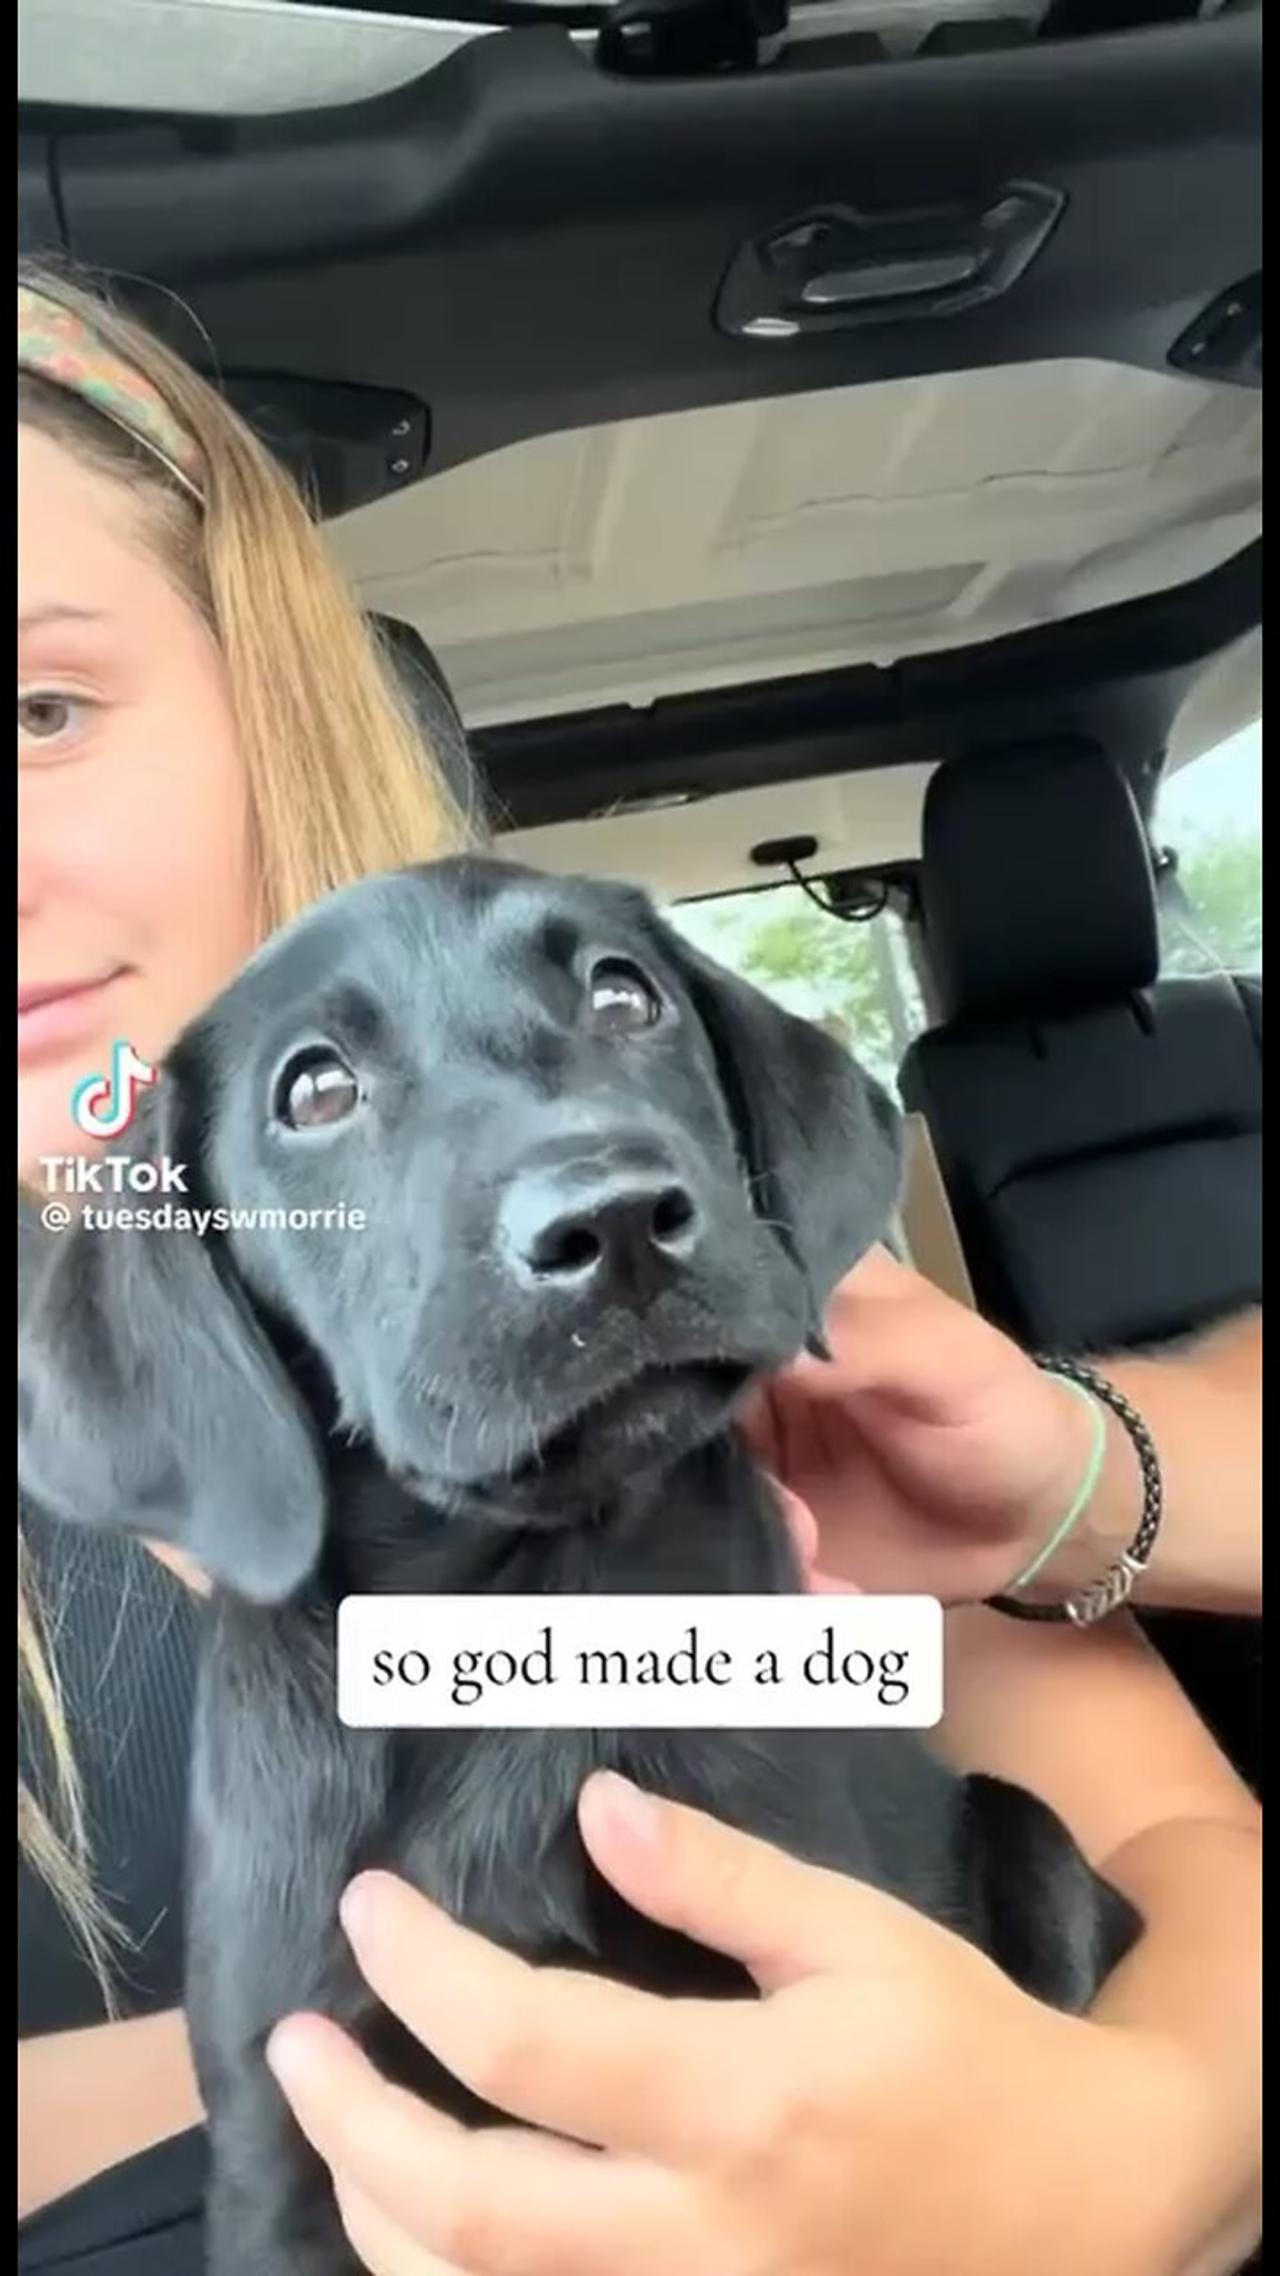 GOD made Dogs. Man’s best friend